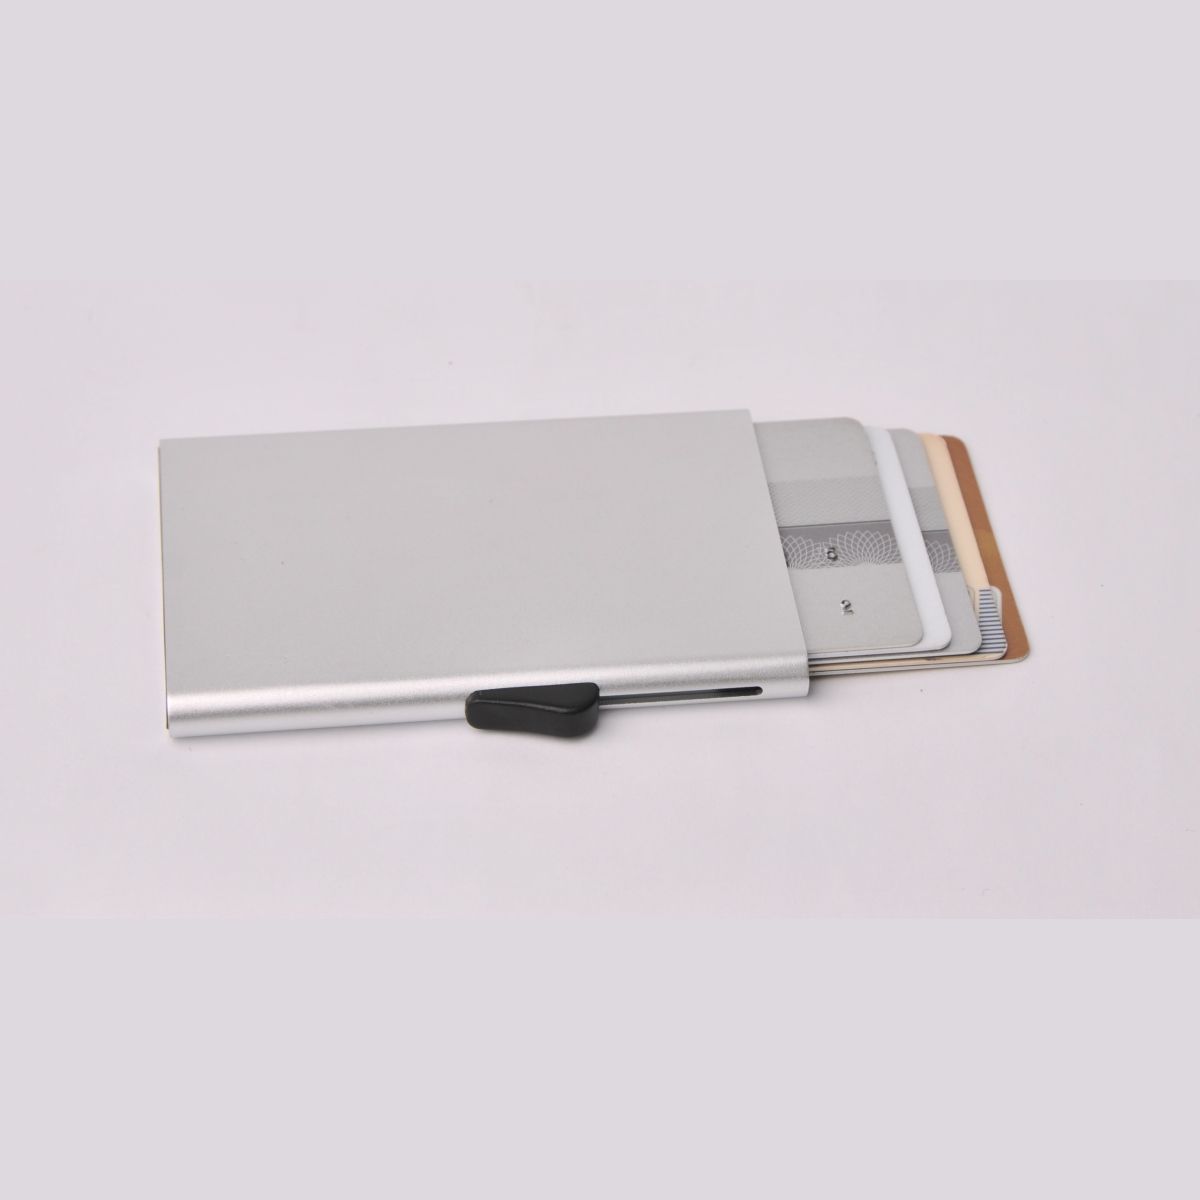 C-Secure Slim Aluminum Card Holder - Blue